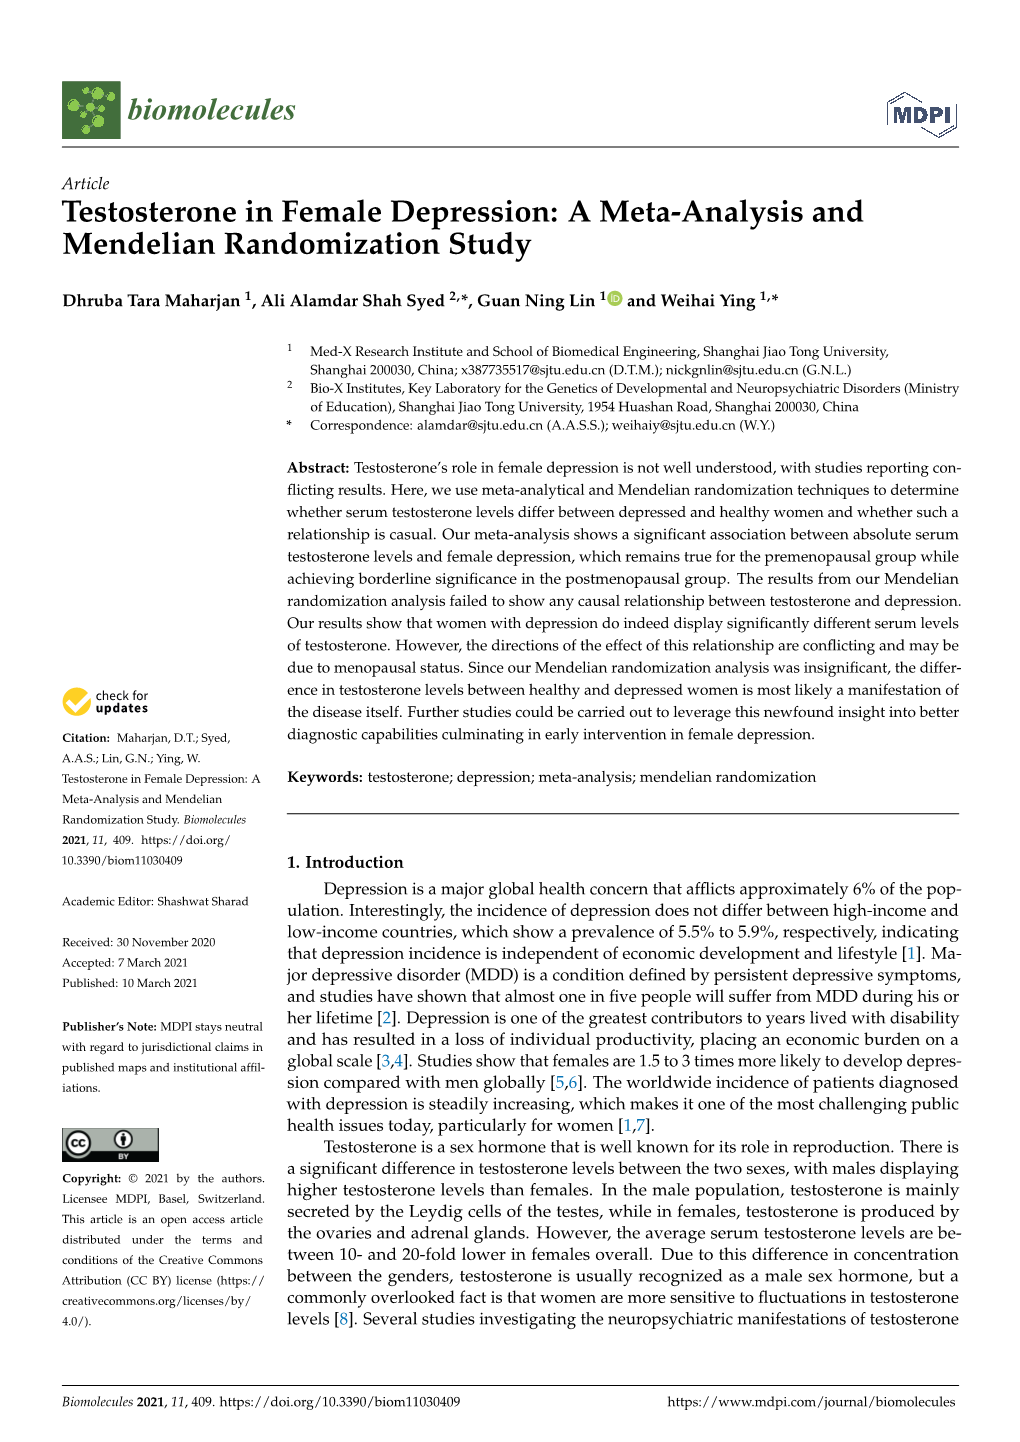 Testosterone in Female Depression: a Meta-Analysis and Mendelian Randomization Study